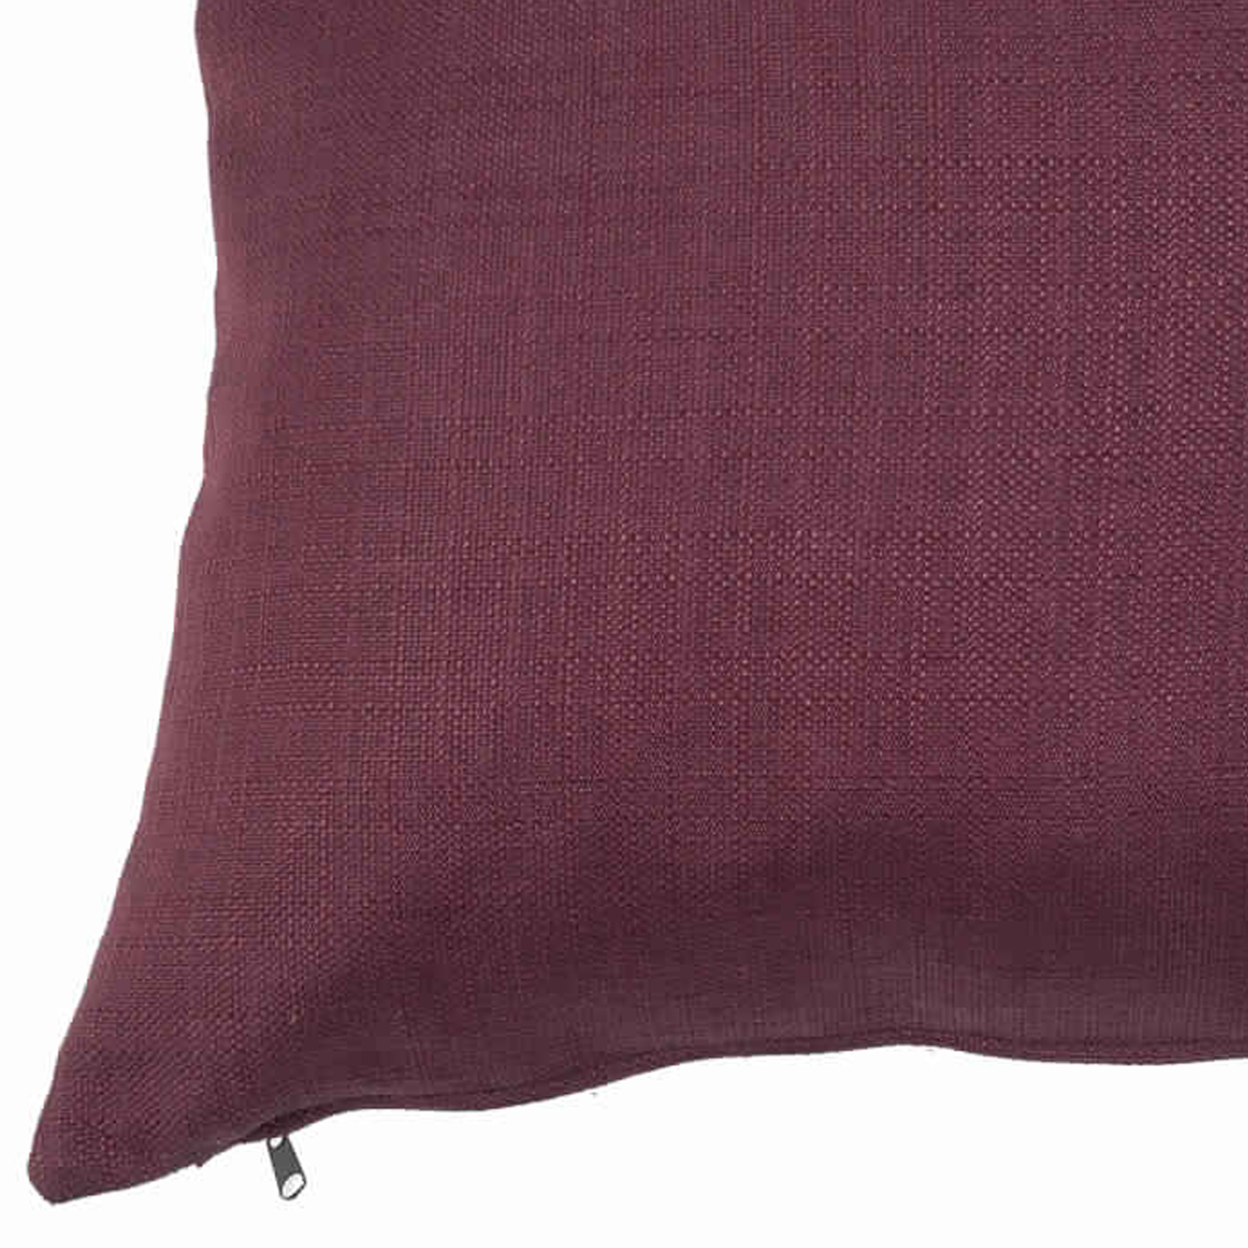 23 X 23 Inch Linen Fabric Pillow With Polyester Fiber Insert, Set Of 2, Purple- Saltoro Sherpi